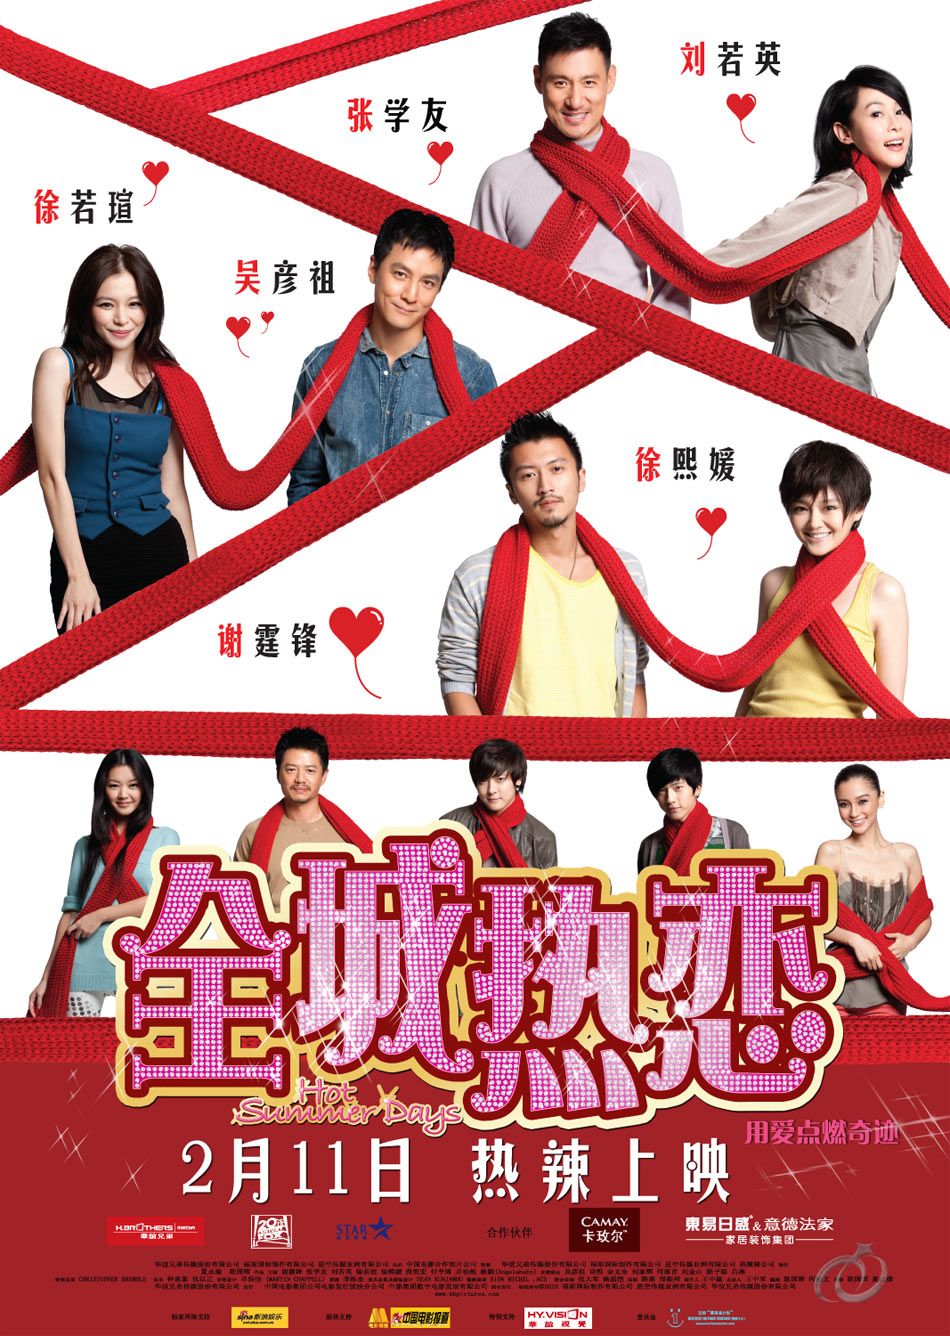 Extra Large Movie Poster Image for Chuen sing yit luen - yit lat lat (#2 of 3)